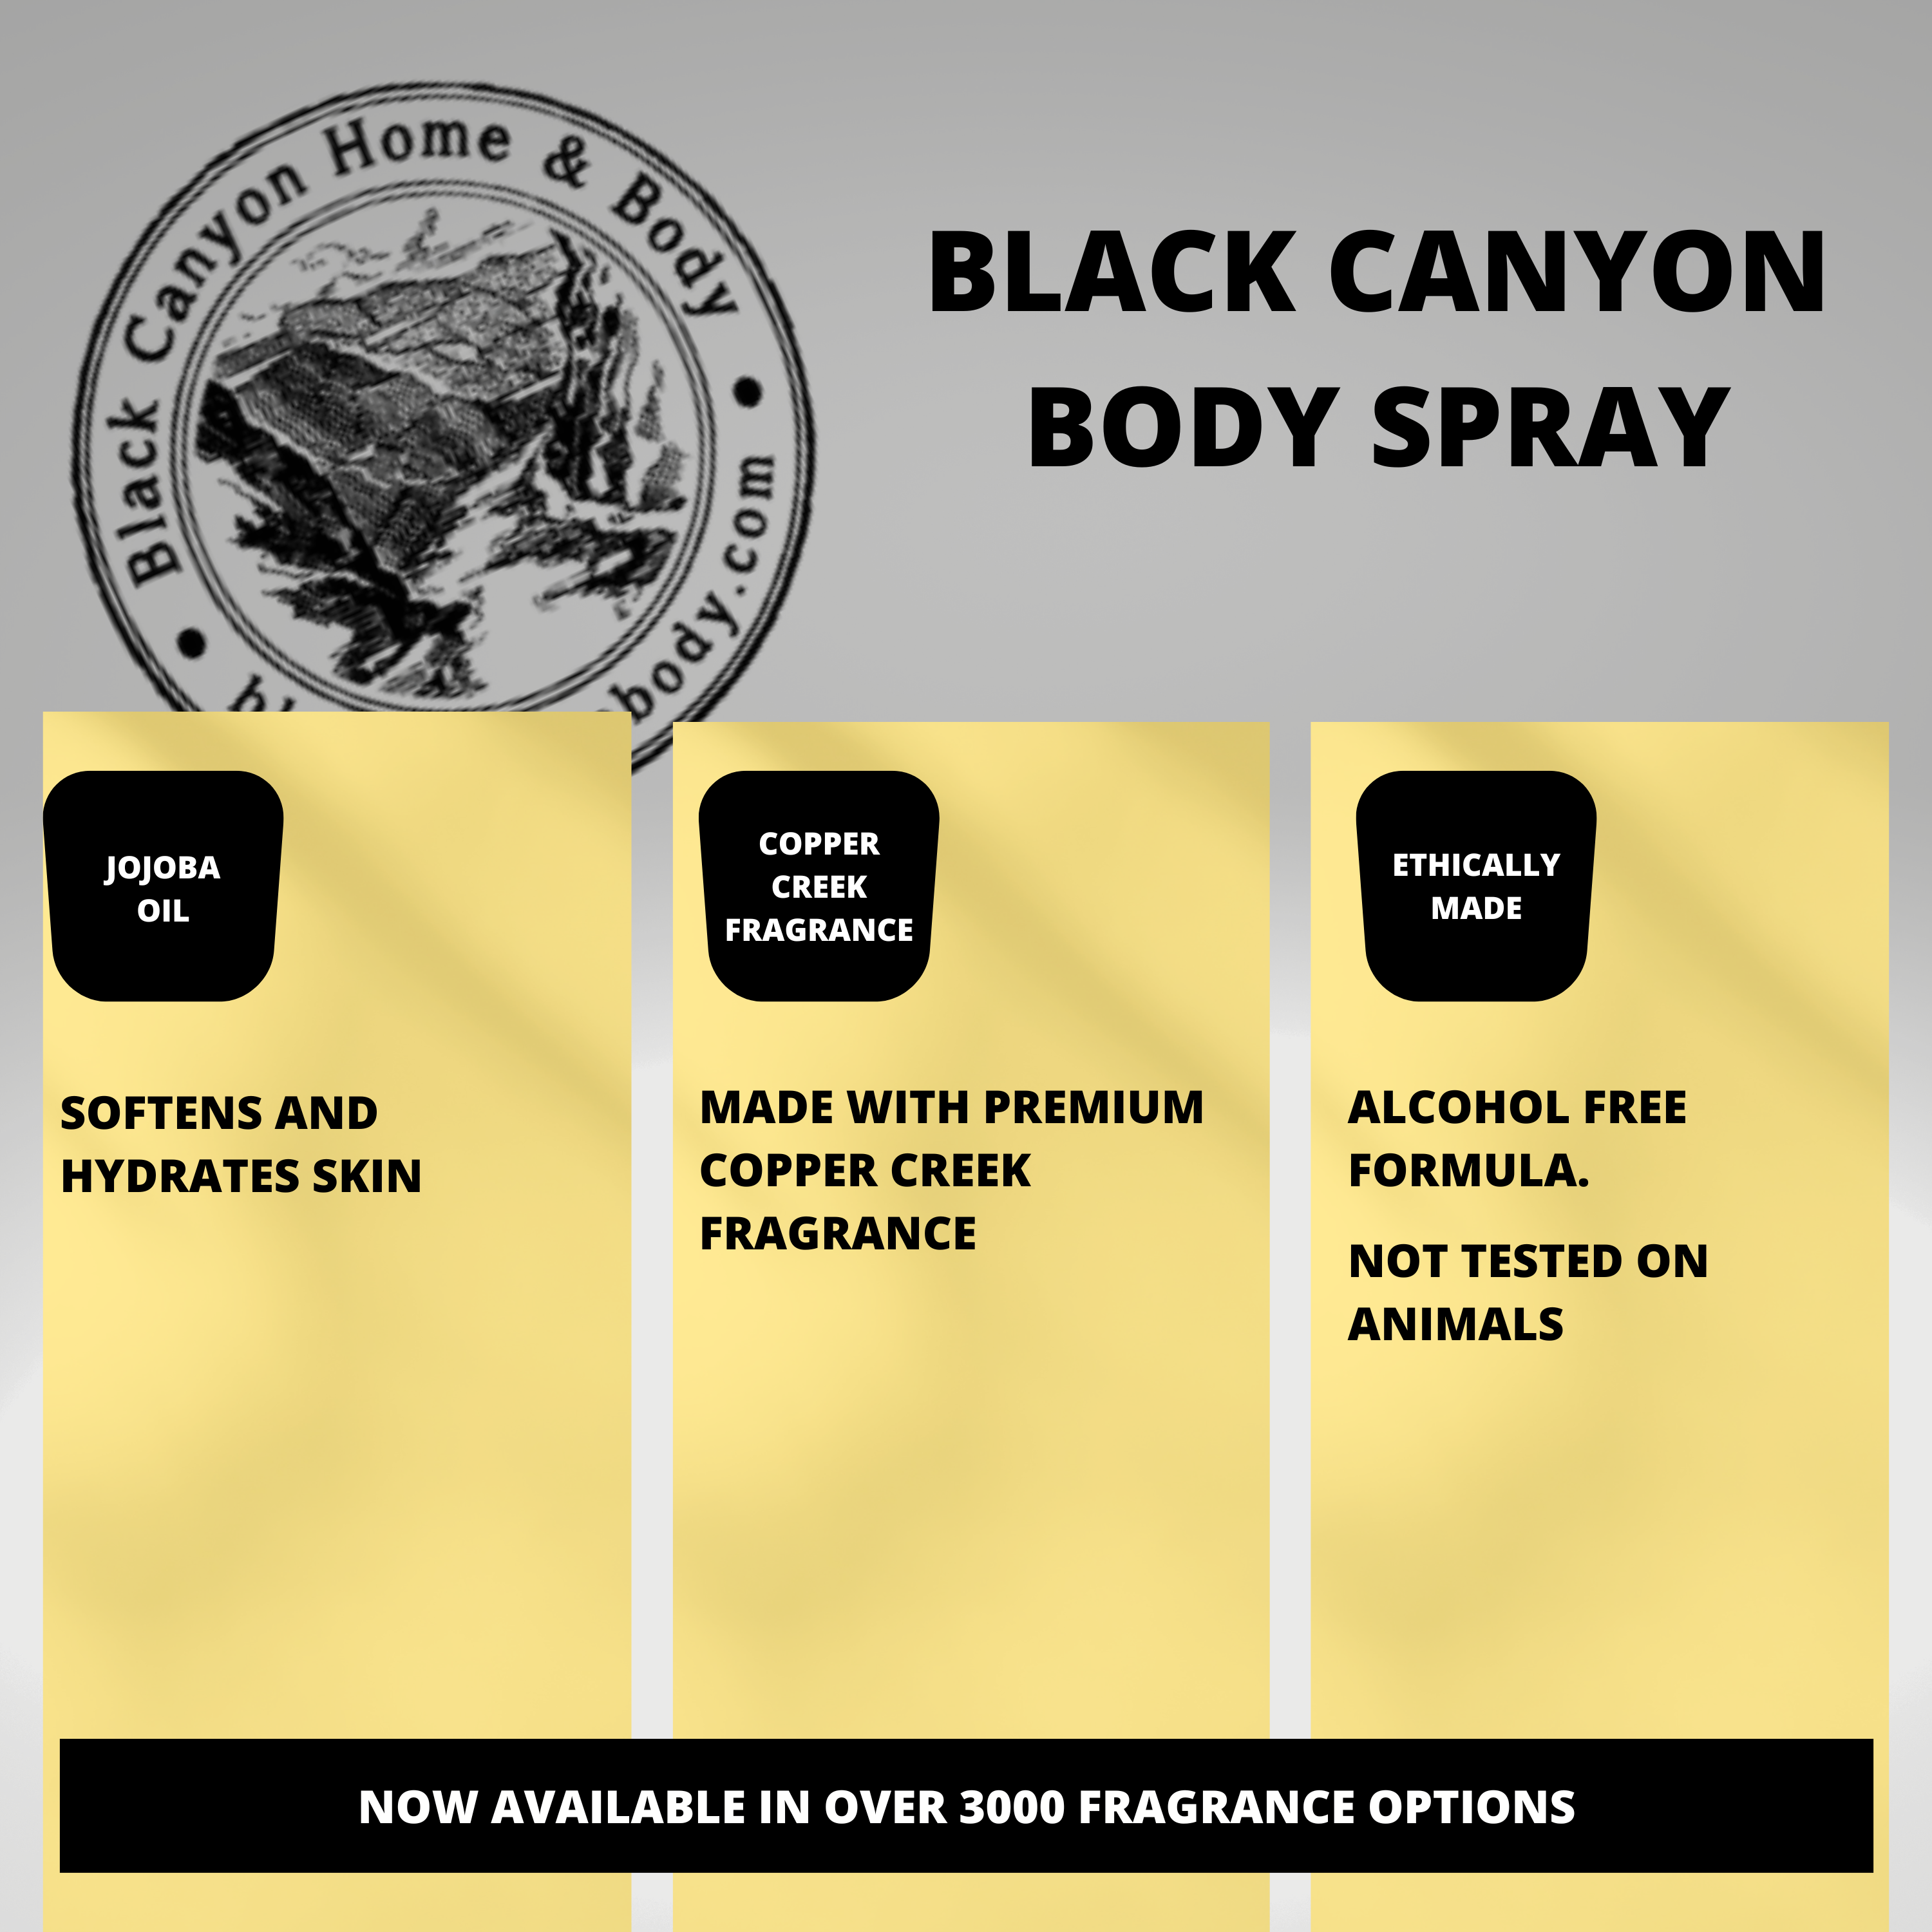 Black Canyon Casablanca Lily Scented Body Spray